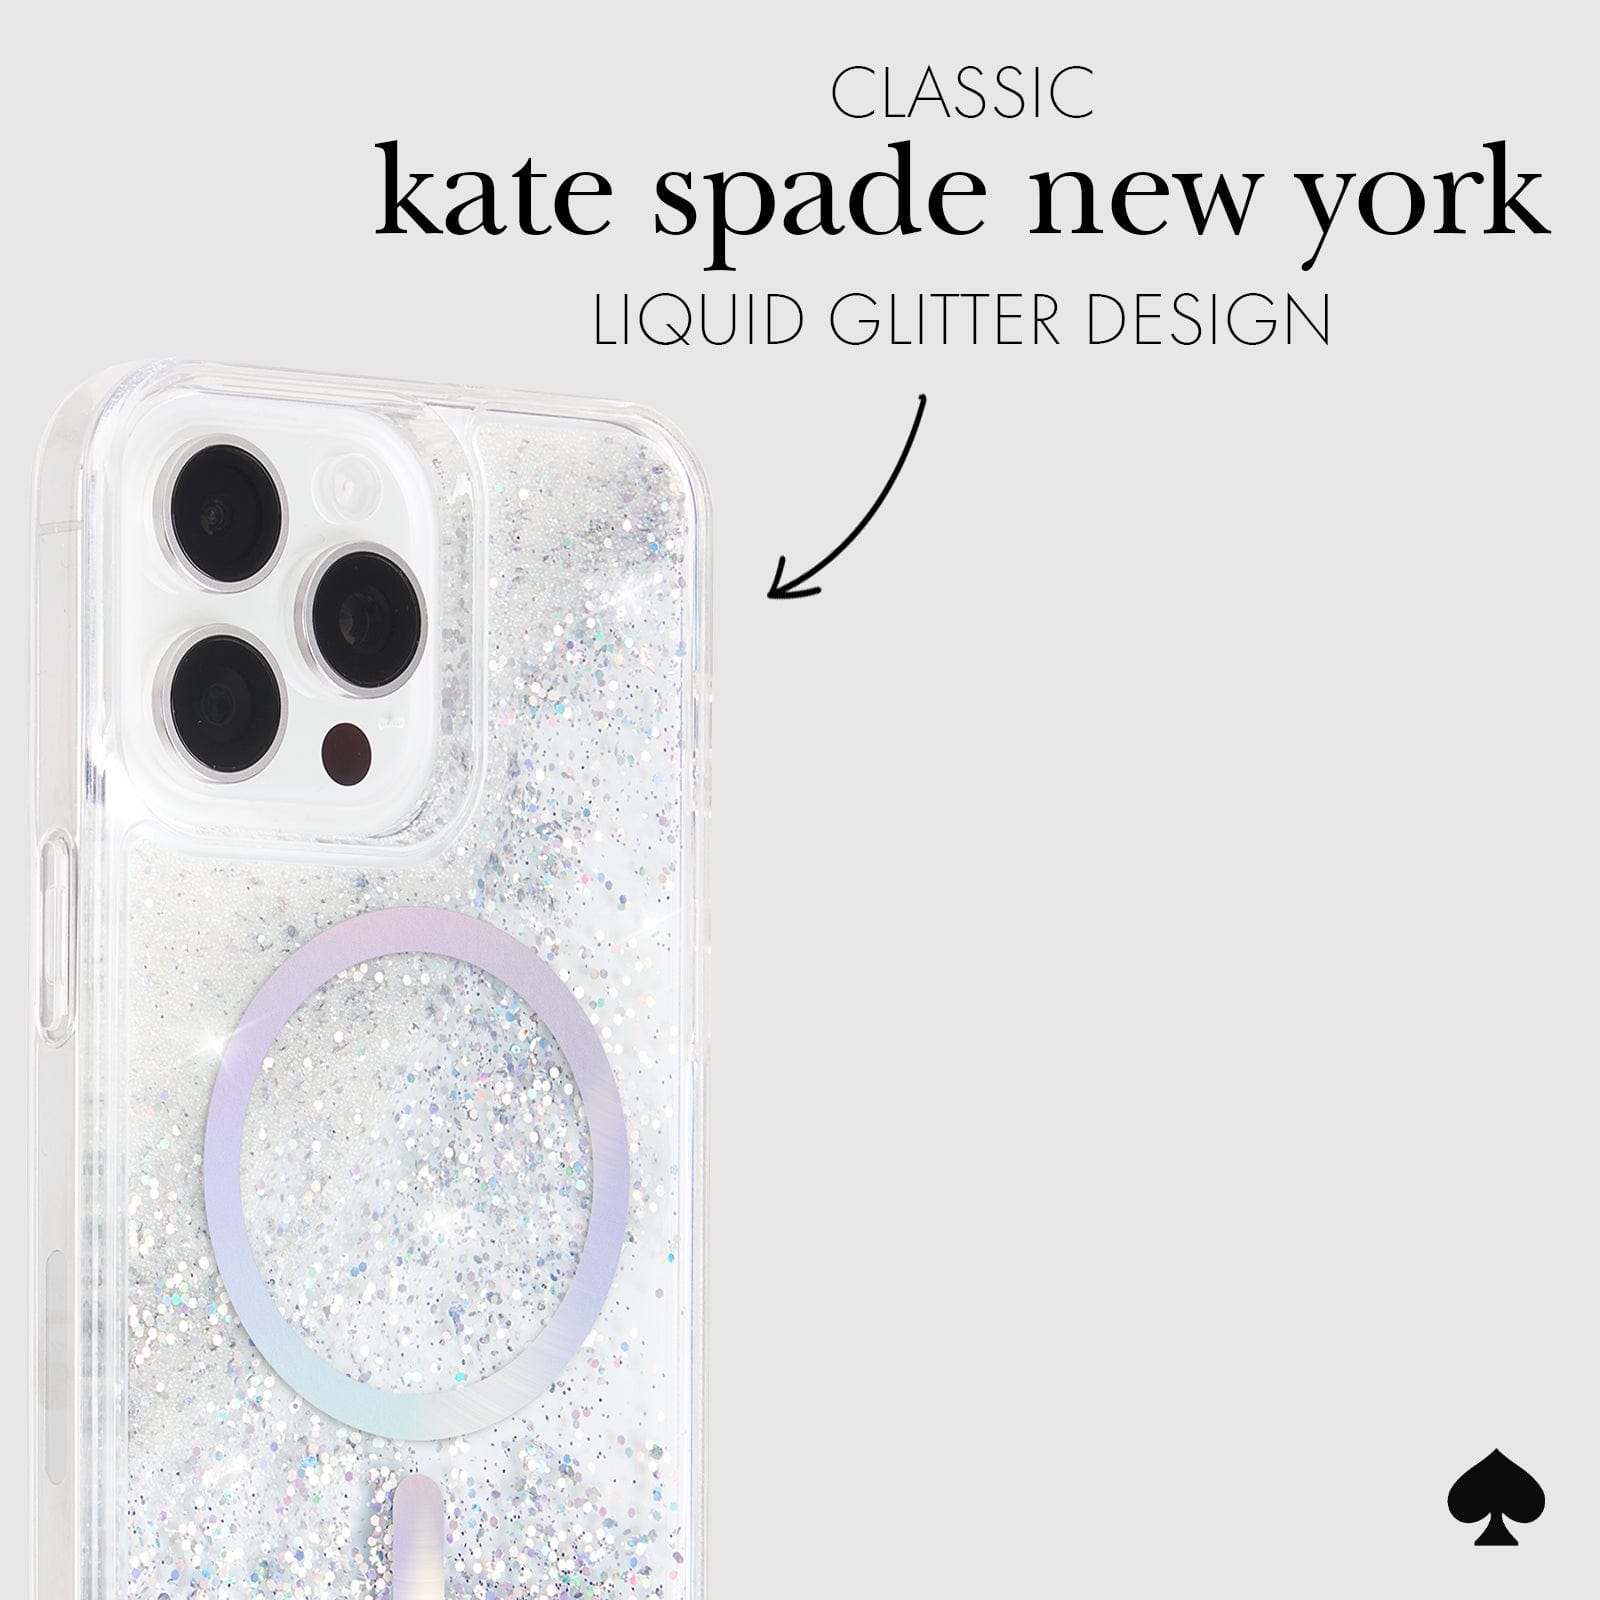 CLASSIC KATE SPADE NEW YORK LIQUID GLITTER DESIGN